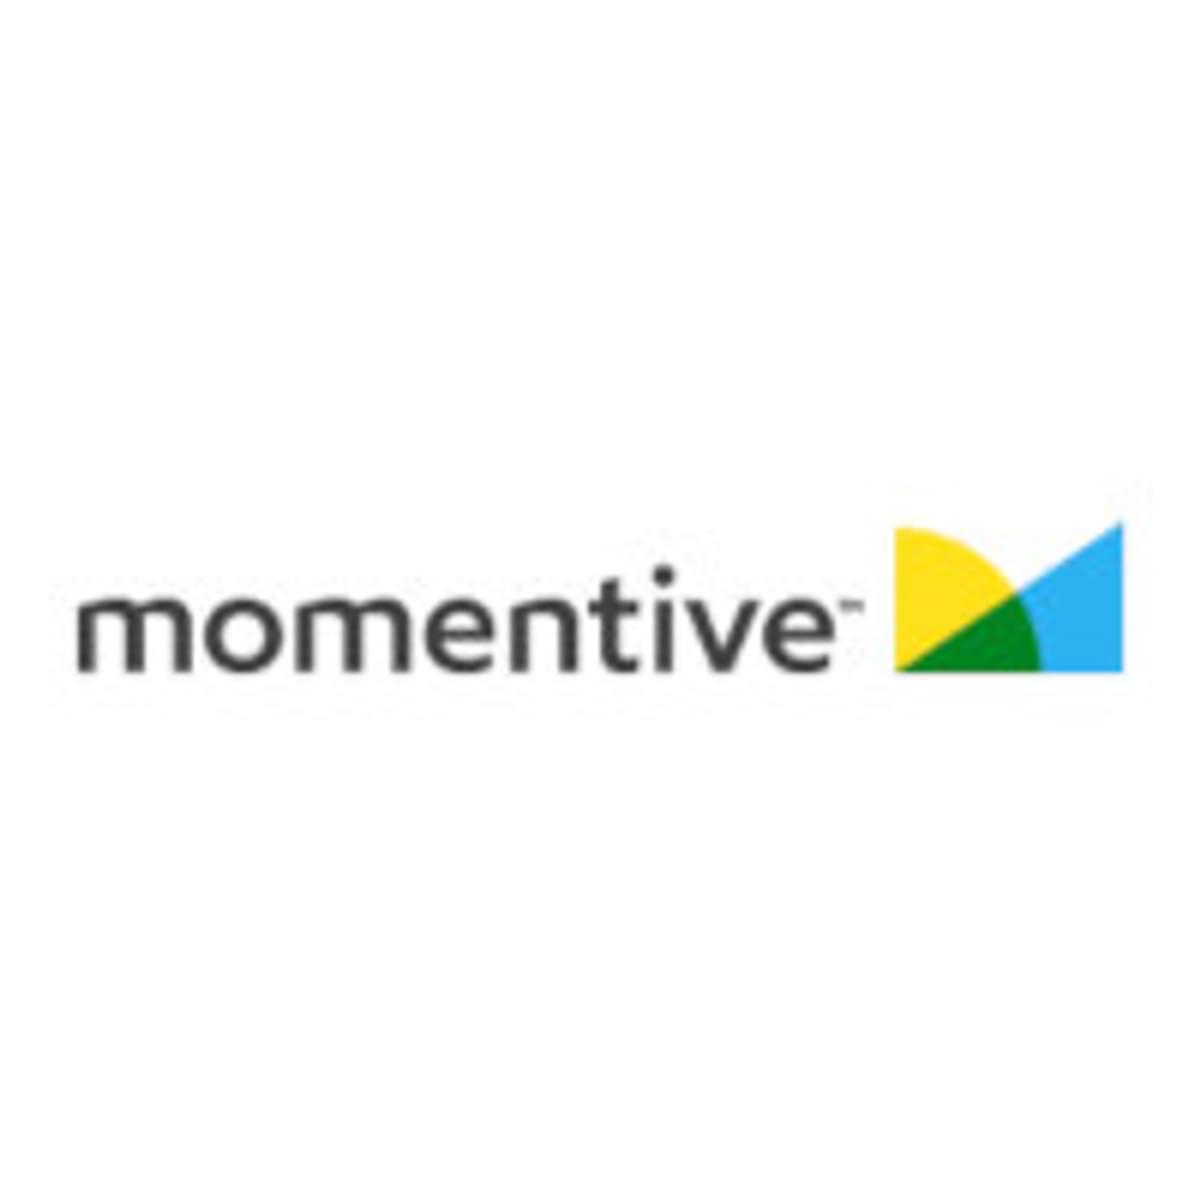 Momentive lanceert SurveyMonkey Enterprise-app voor Zoom image